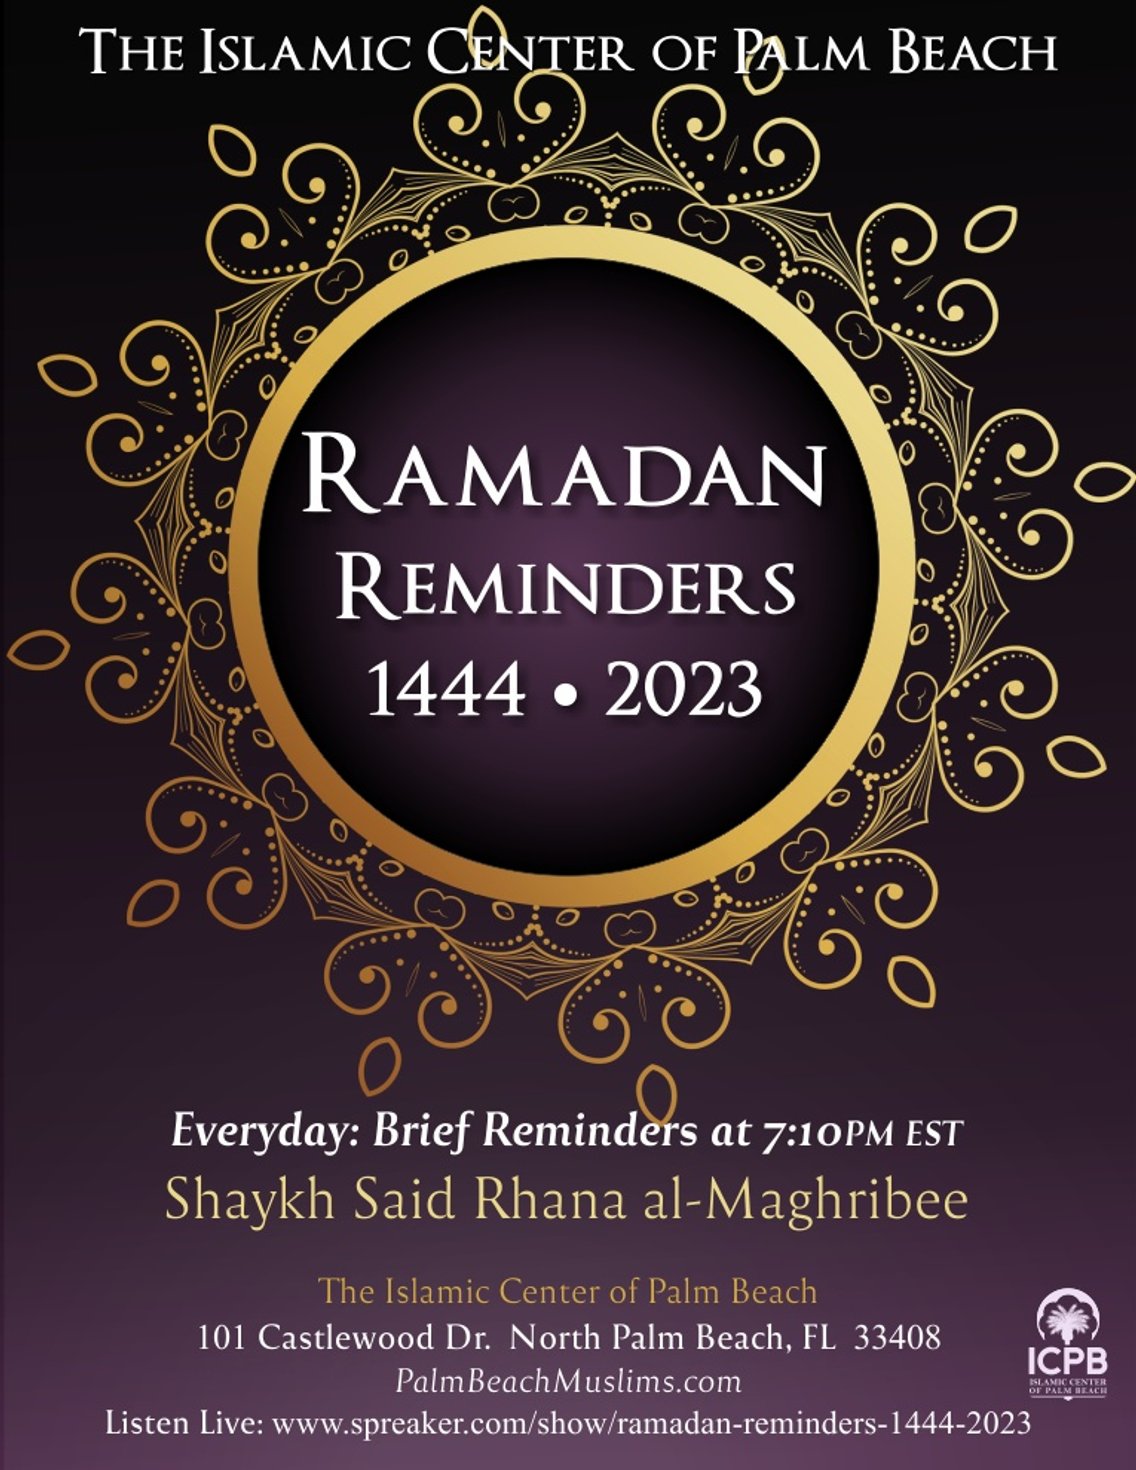 01 Ramadan Reminders 1444 2023 - Cover Image